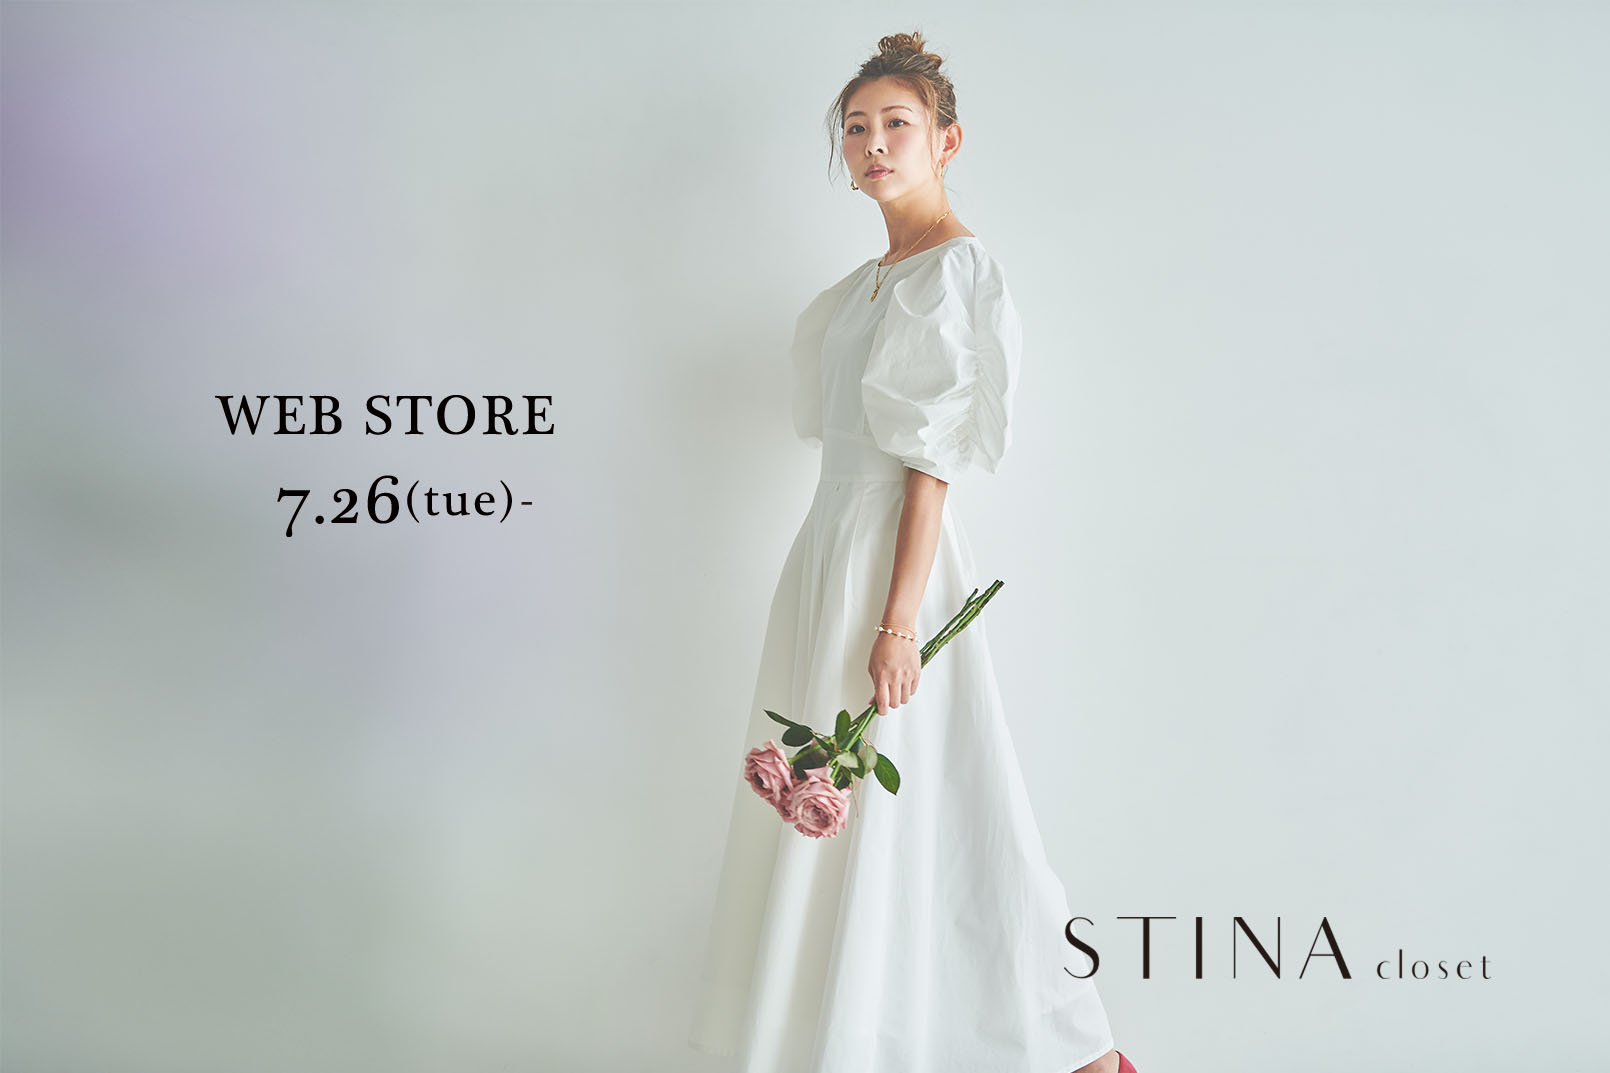 STINA closet web store